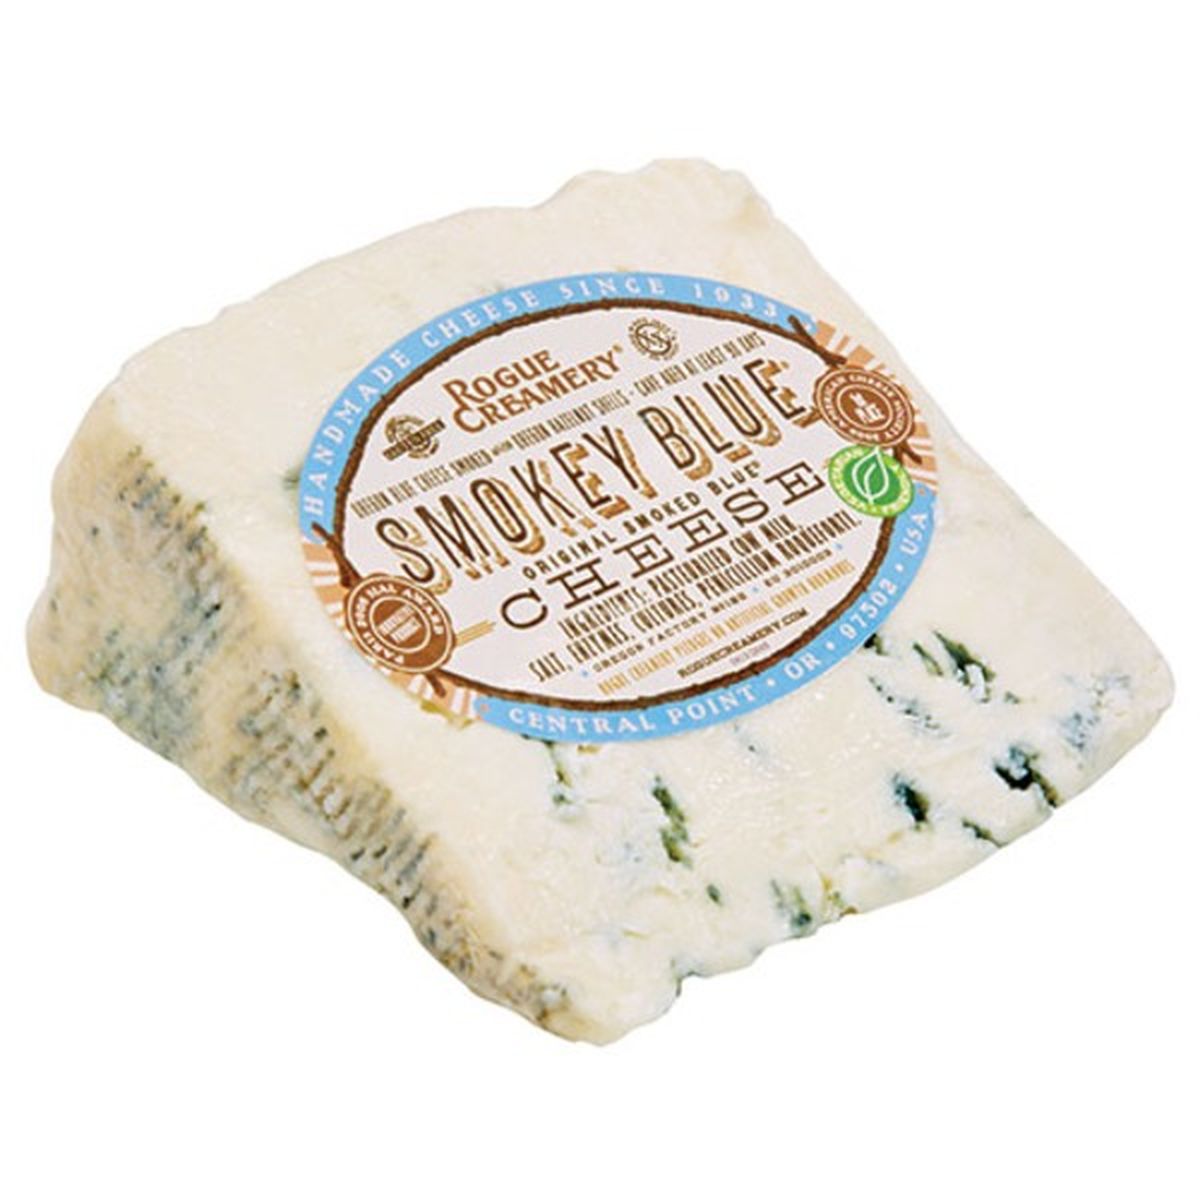 Calories in Wegmans Organic Smokey Blue Cheese